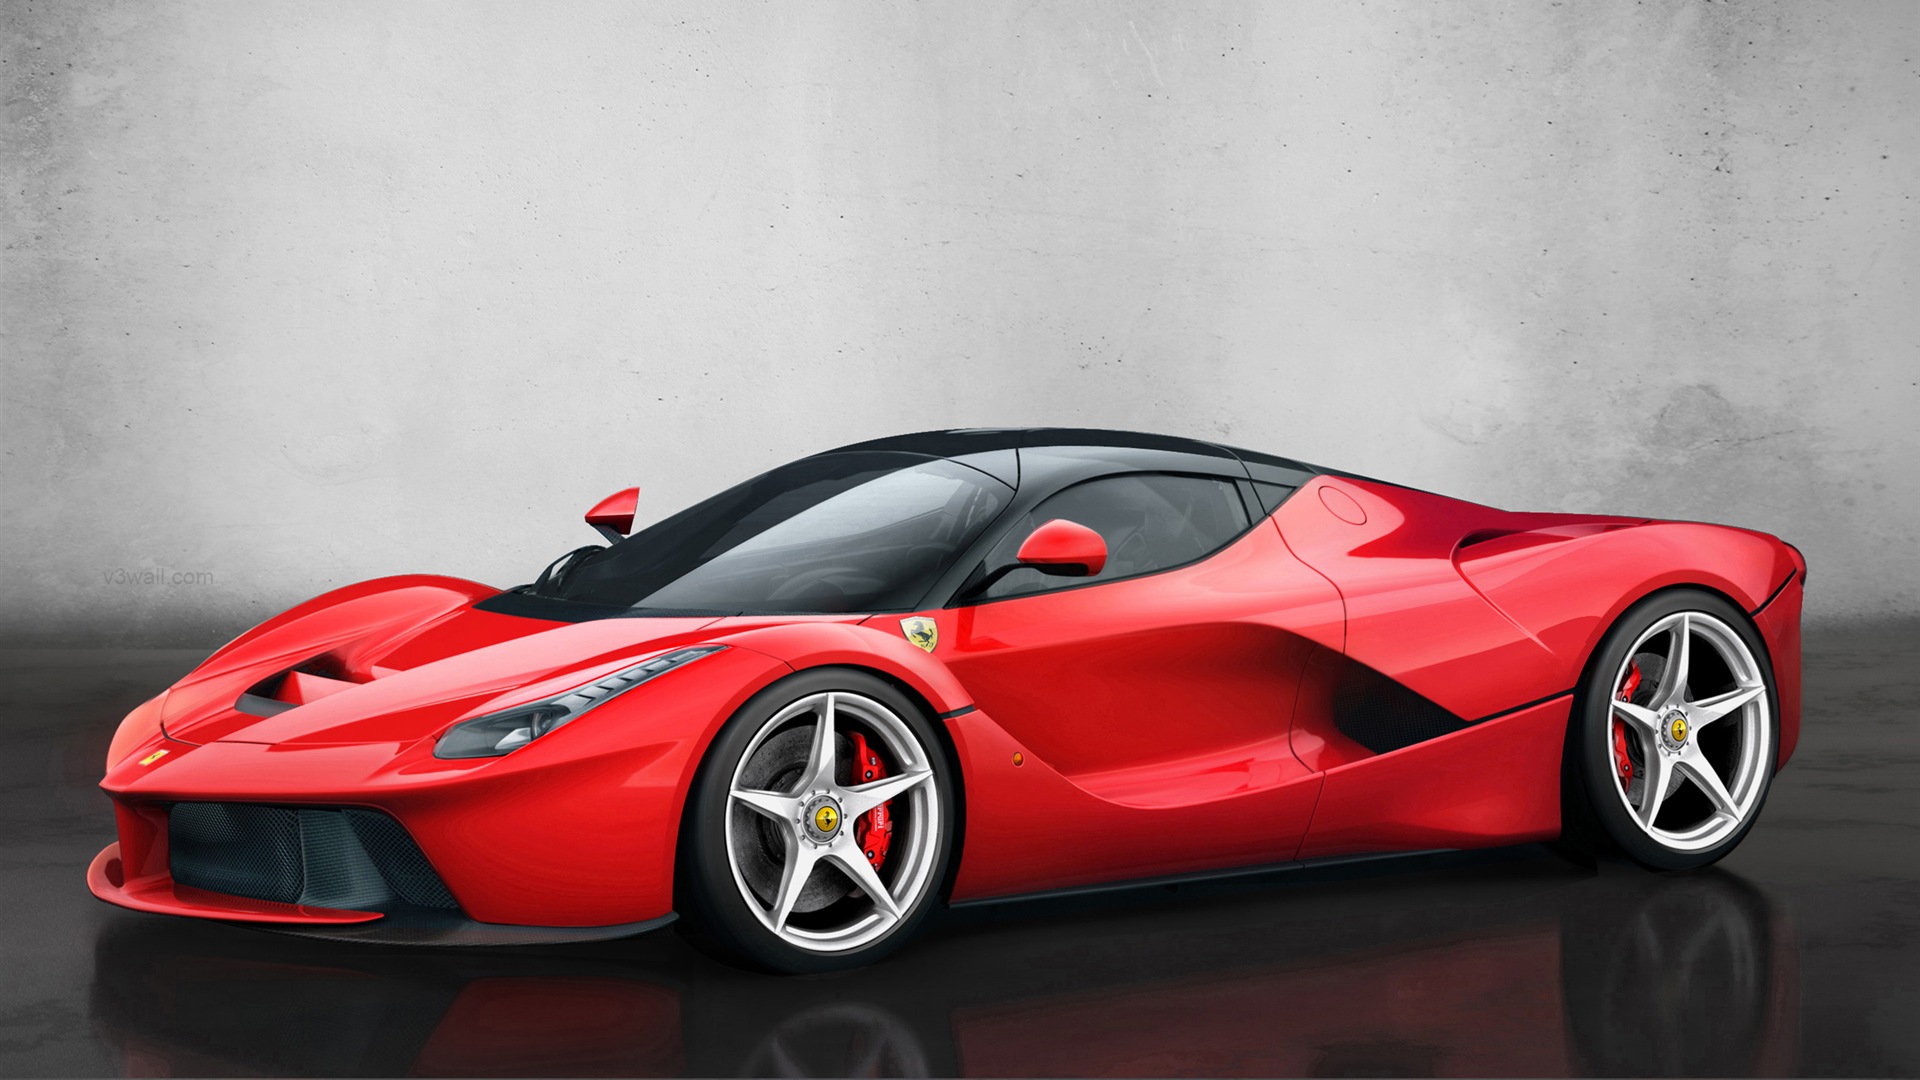 2013 Ferrari LaFerrari 法拉利LaFerrari红色超级跑车高清壁纸7 - 1920x1080